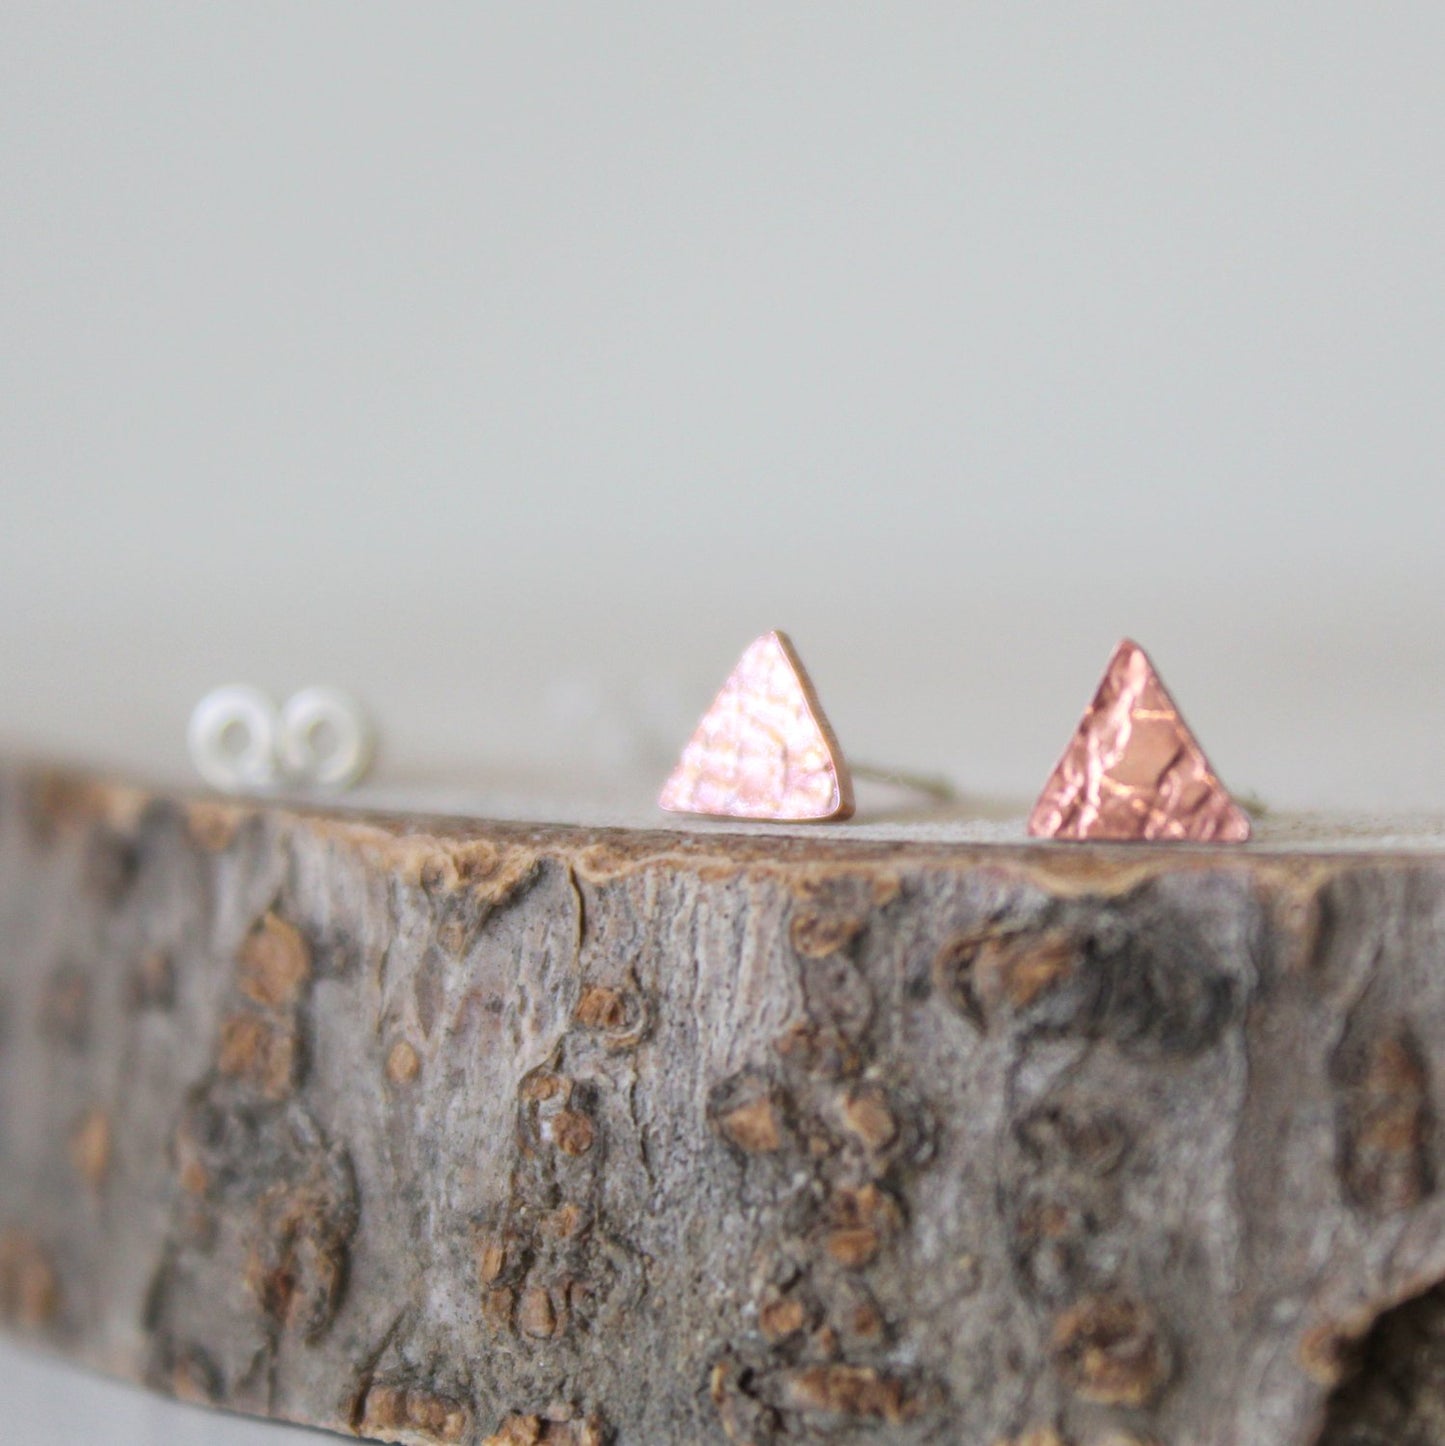 Copper Tiny Triangle Studs - Shine On Shop